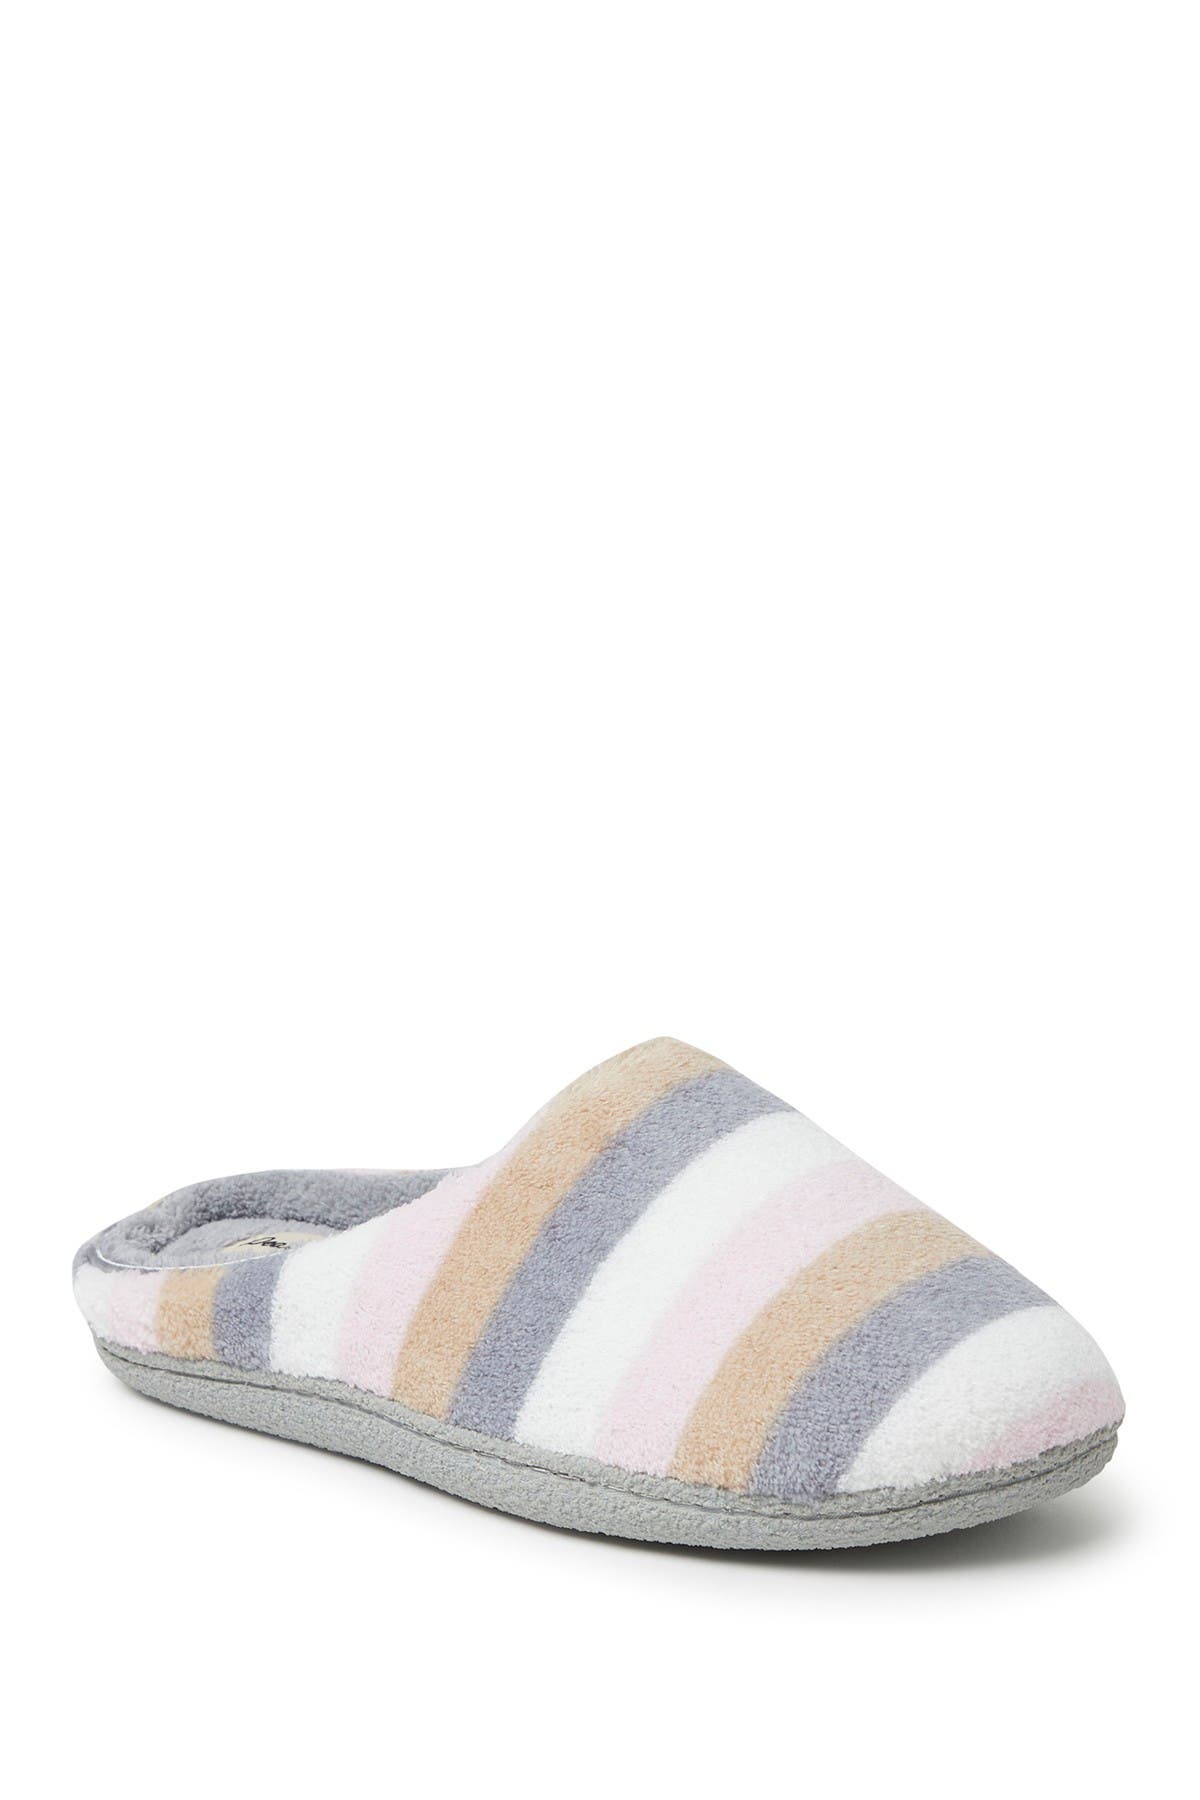 dearfoam terry cloth slippers